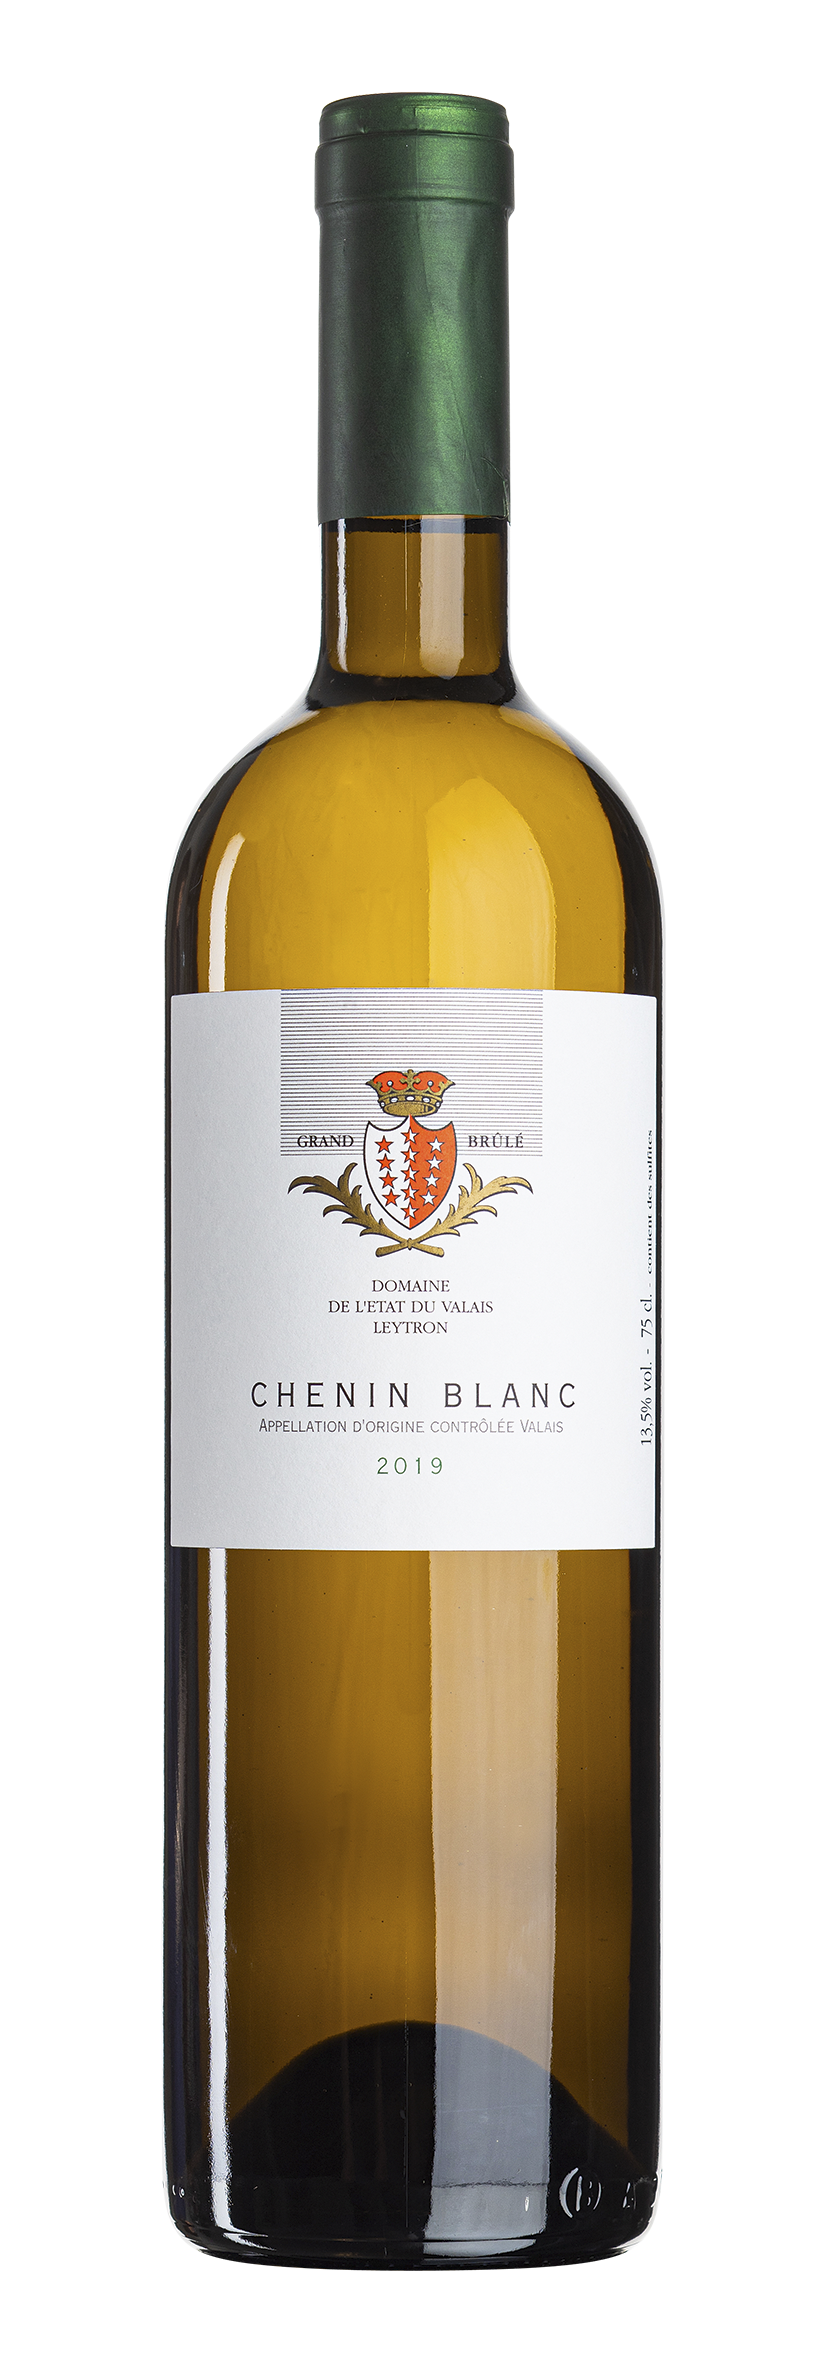 Valais AOC Chenin Blanc 2019